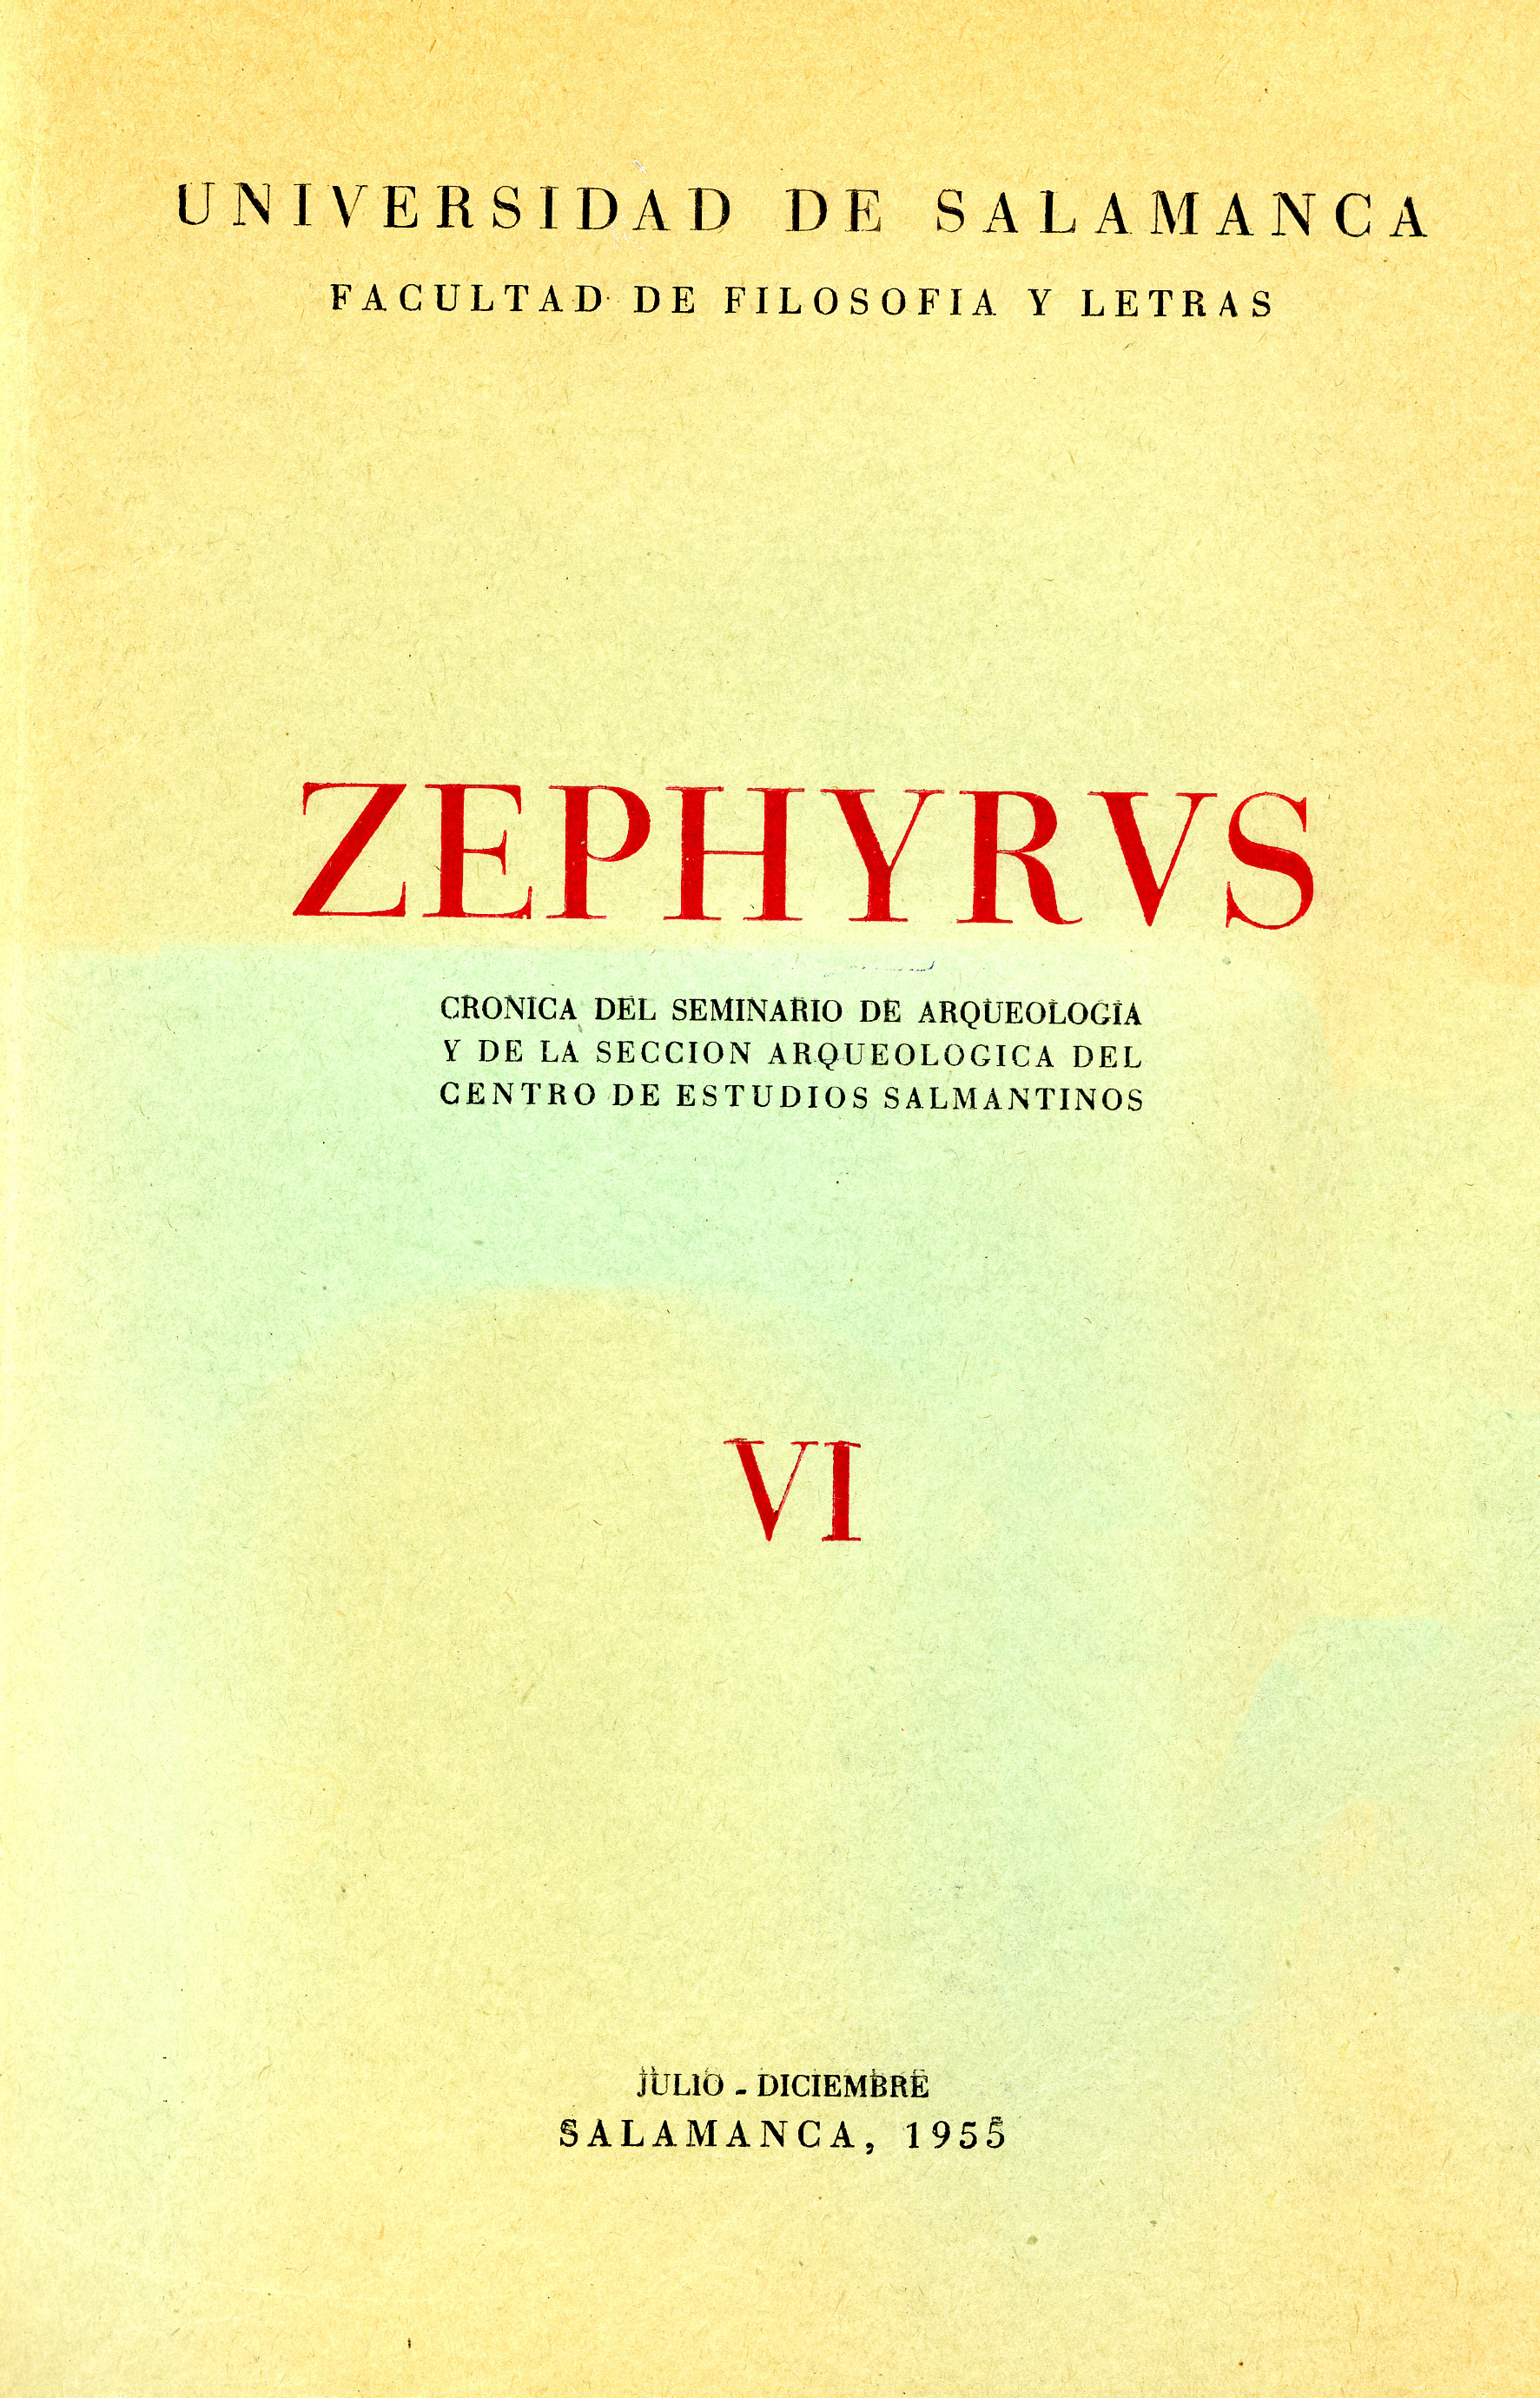                         Ver Vol. 6 (1955)
                    